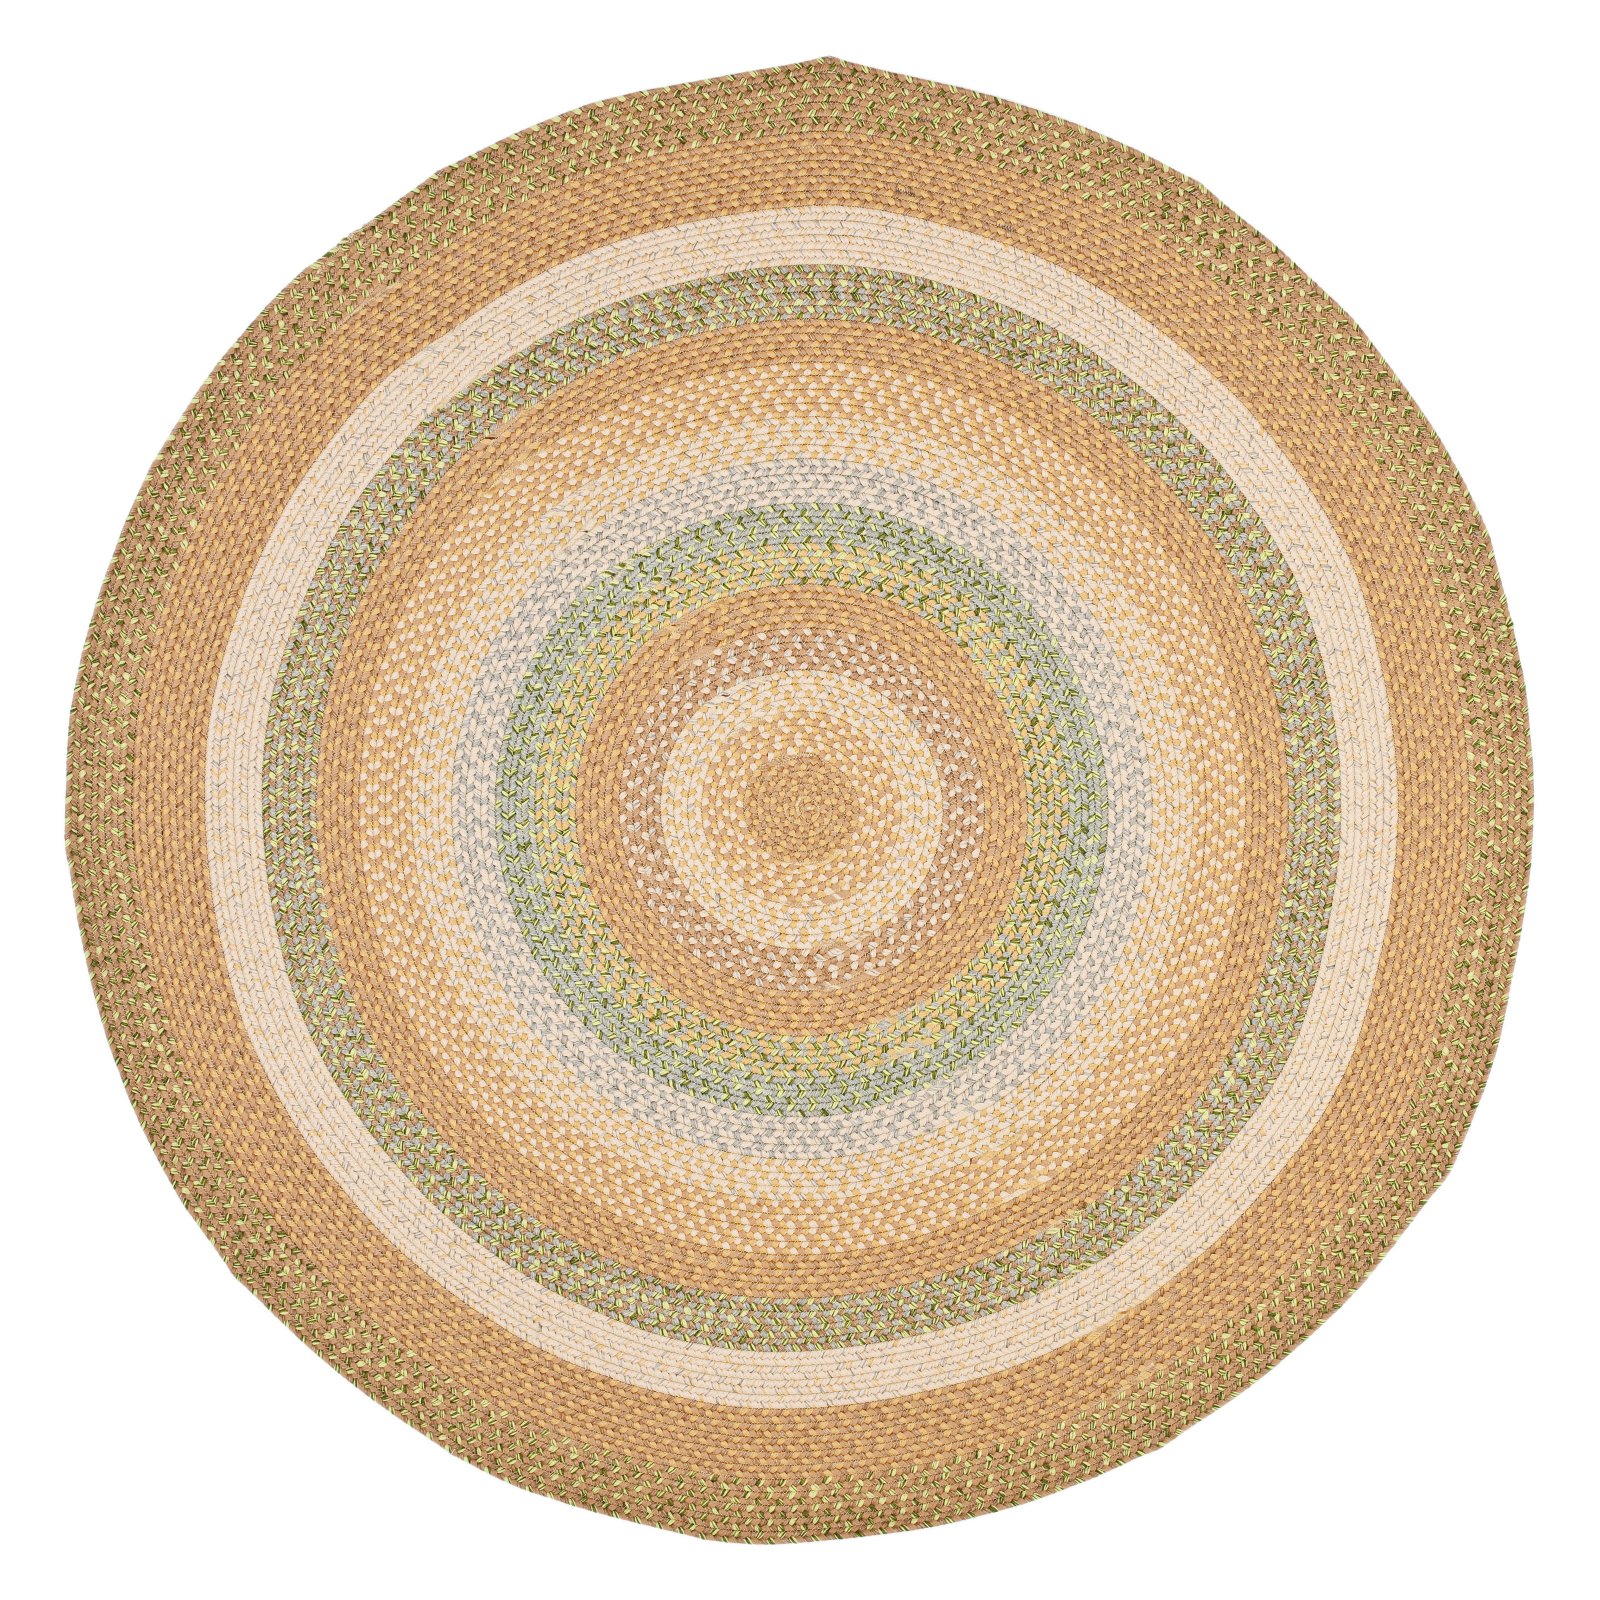 SAFAVIEH Braided Marco Stripe Bordered Area Rug, Tan/Multi, 4' x 6' Oval - image 3 of 5